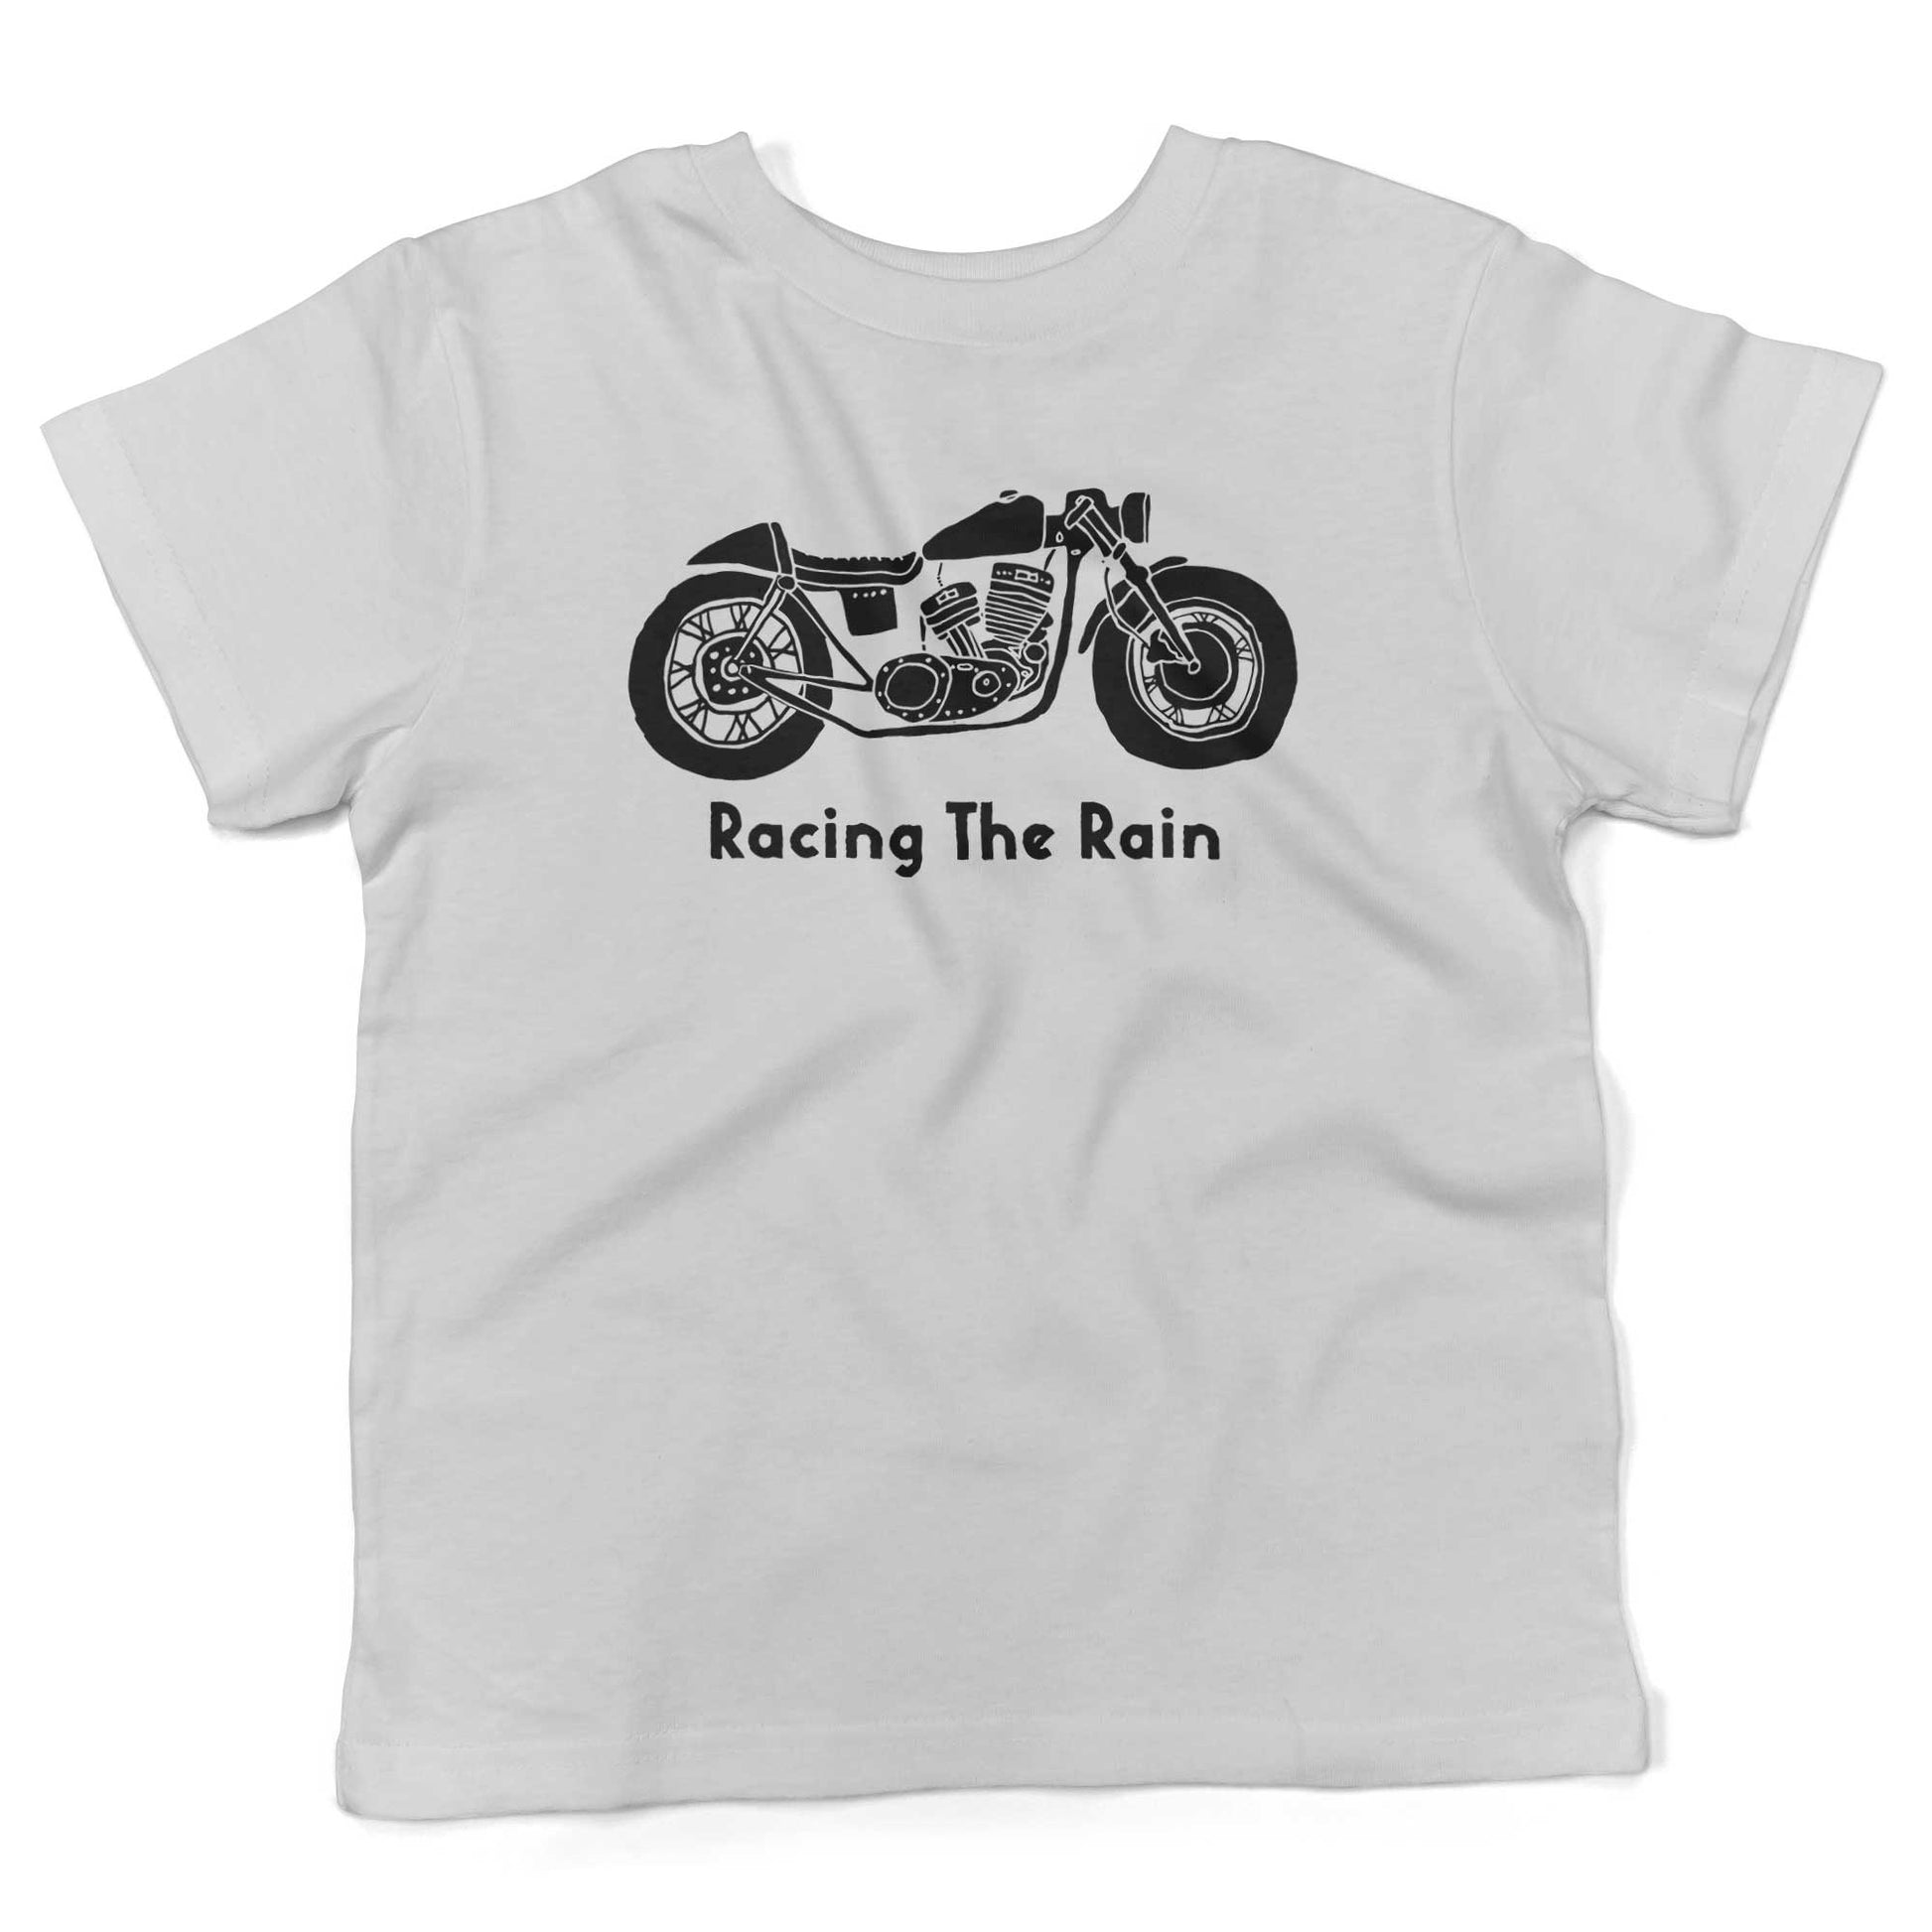 Racing The Rain Toddler Shirt-White-2T